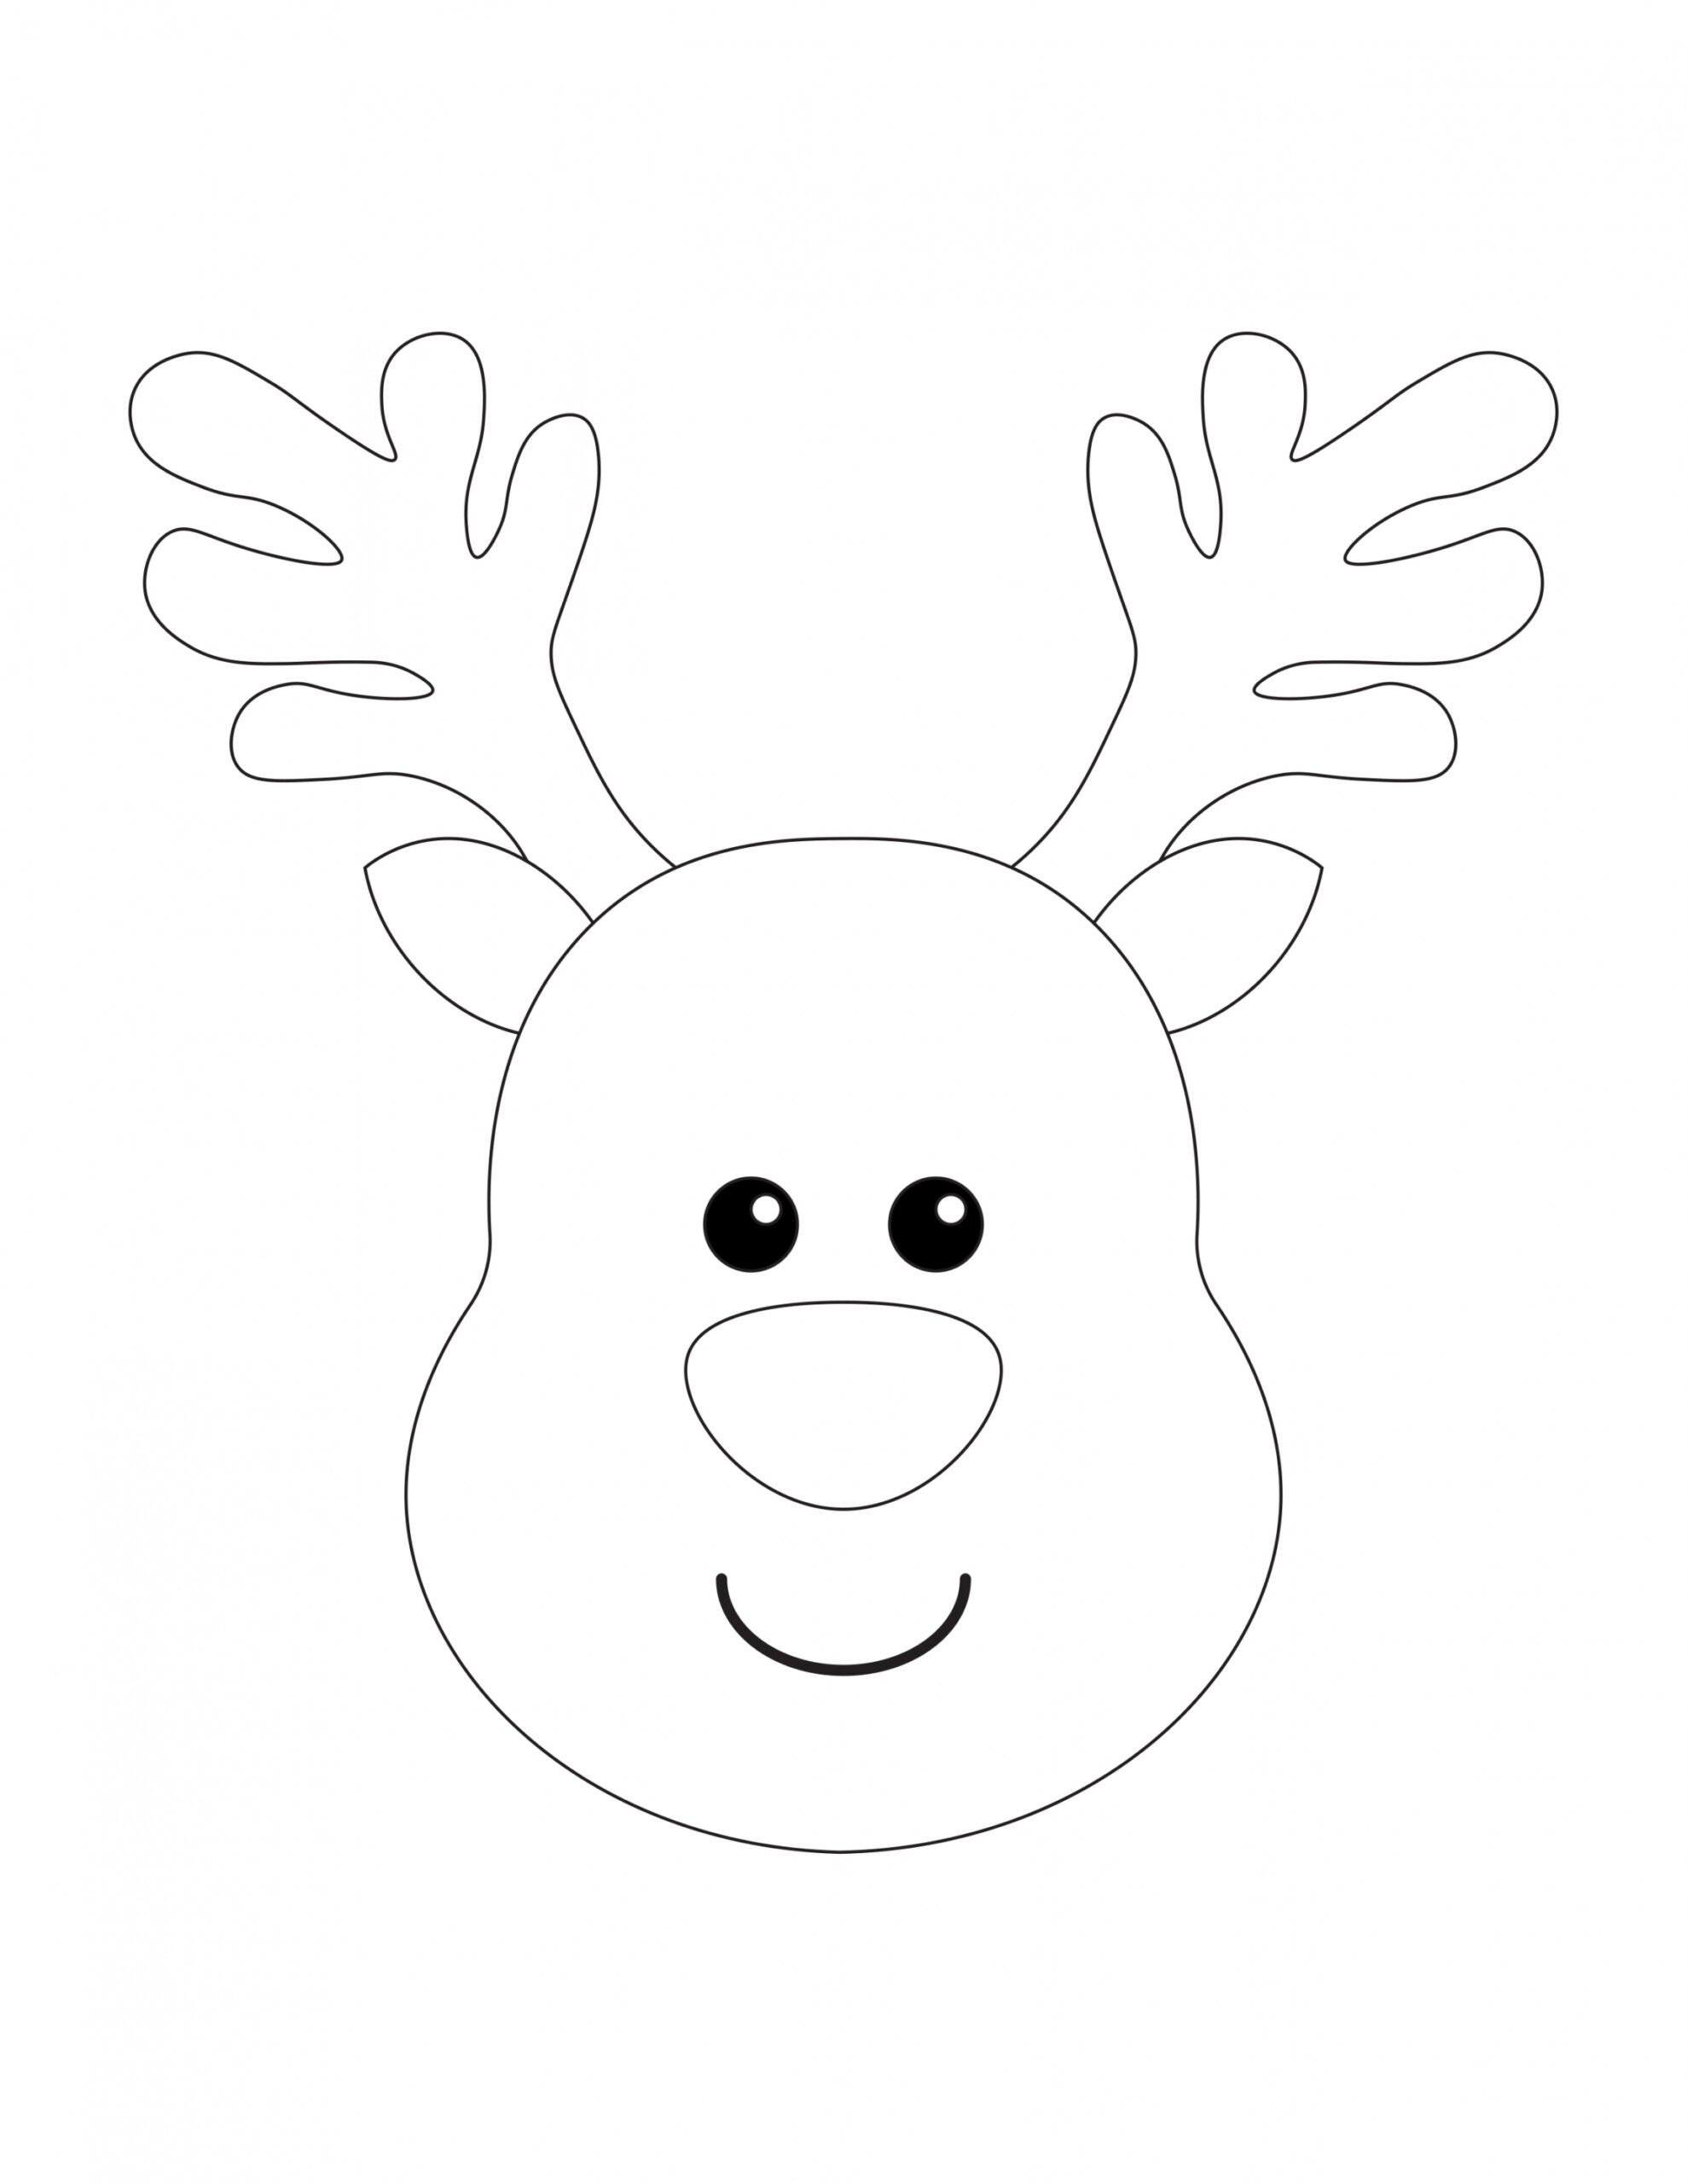 Free Printable Reindeer Templates - Daily Printables - FREE Printables - Printable Reindeer Template